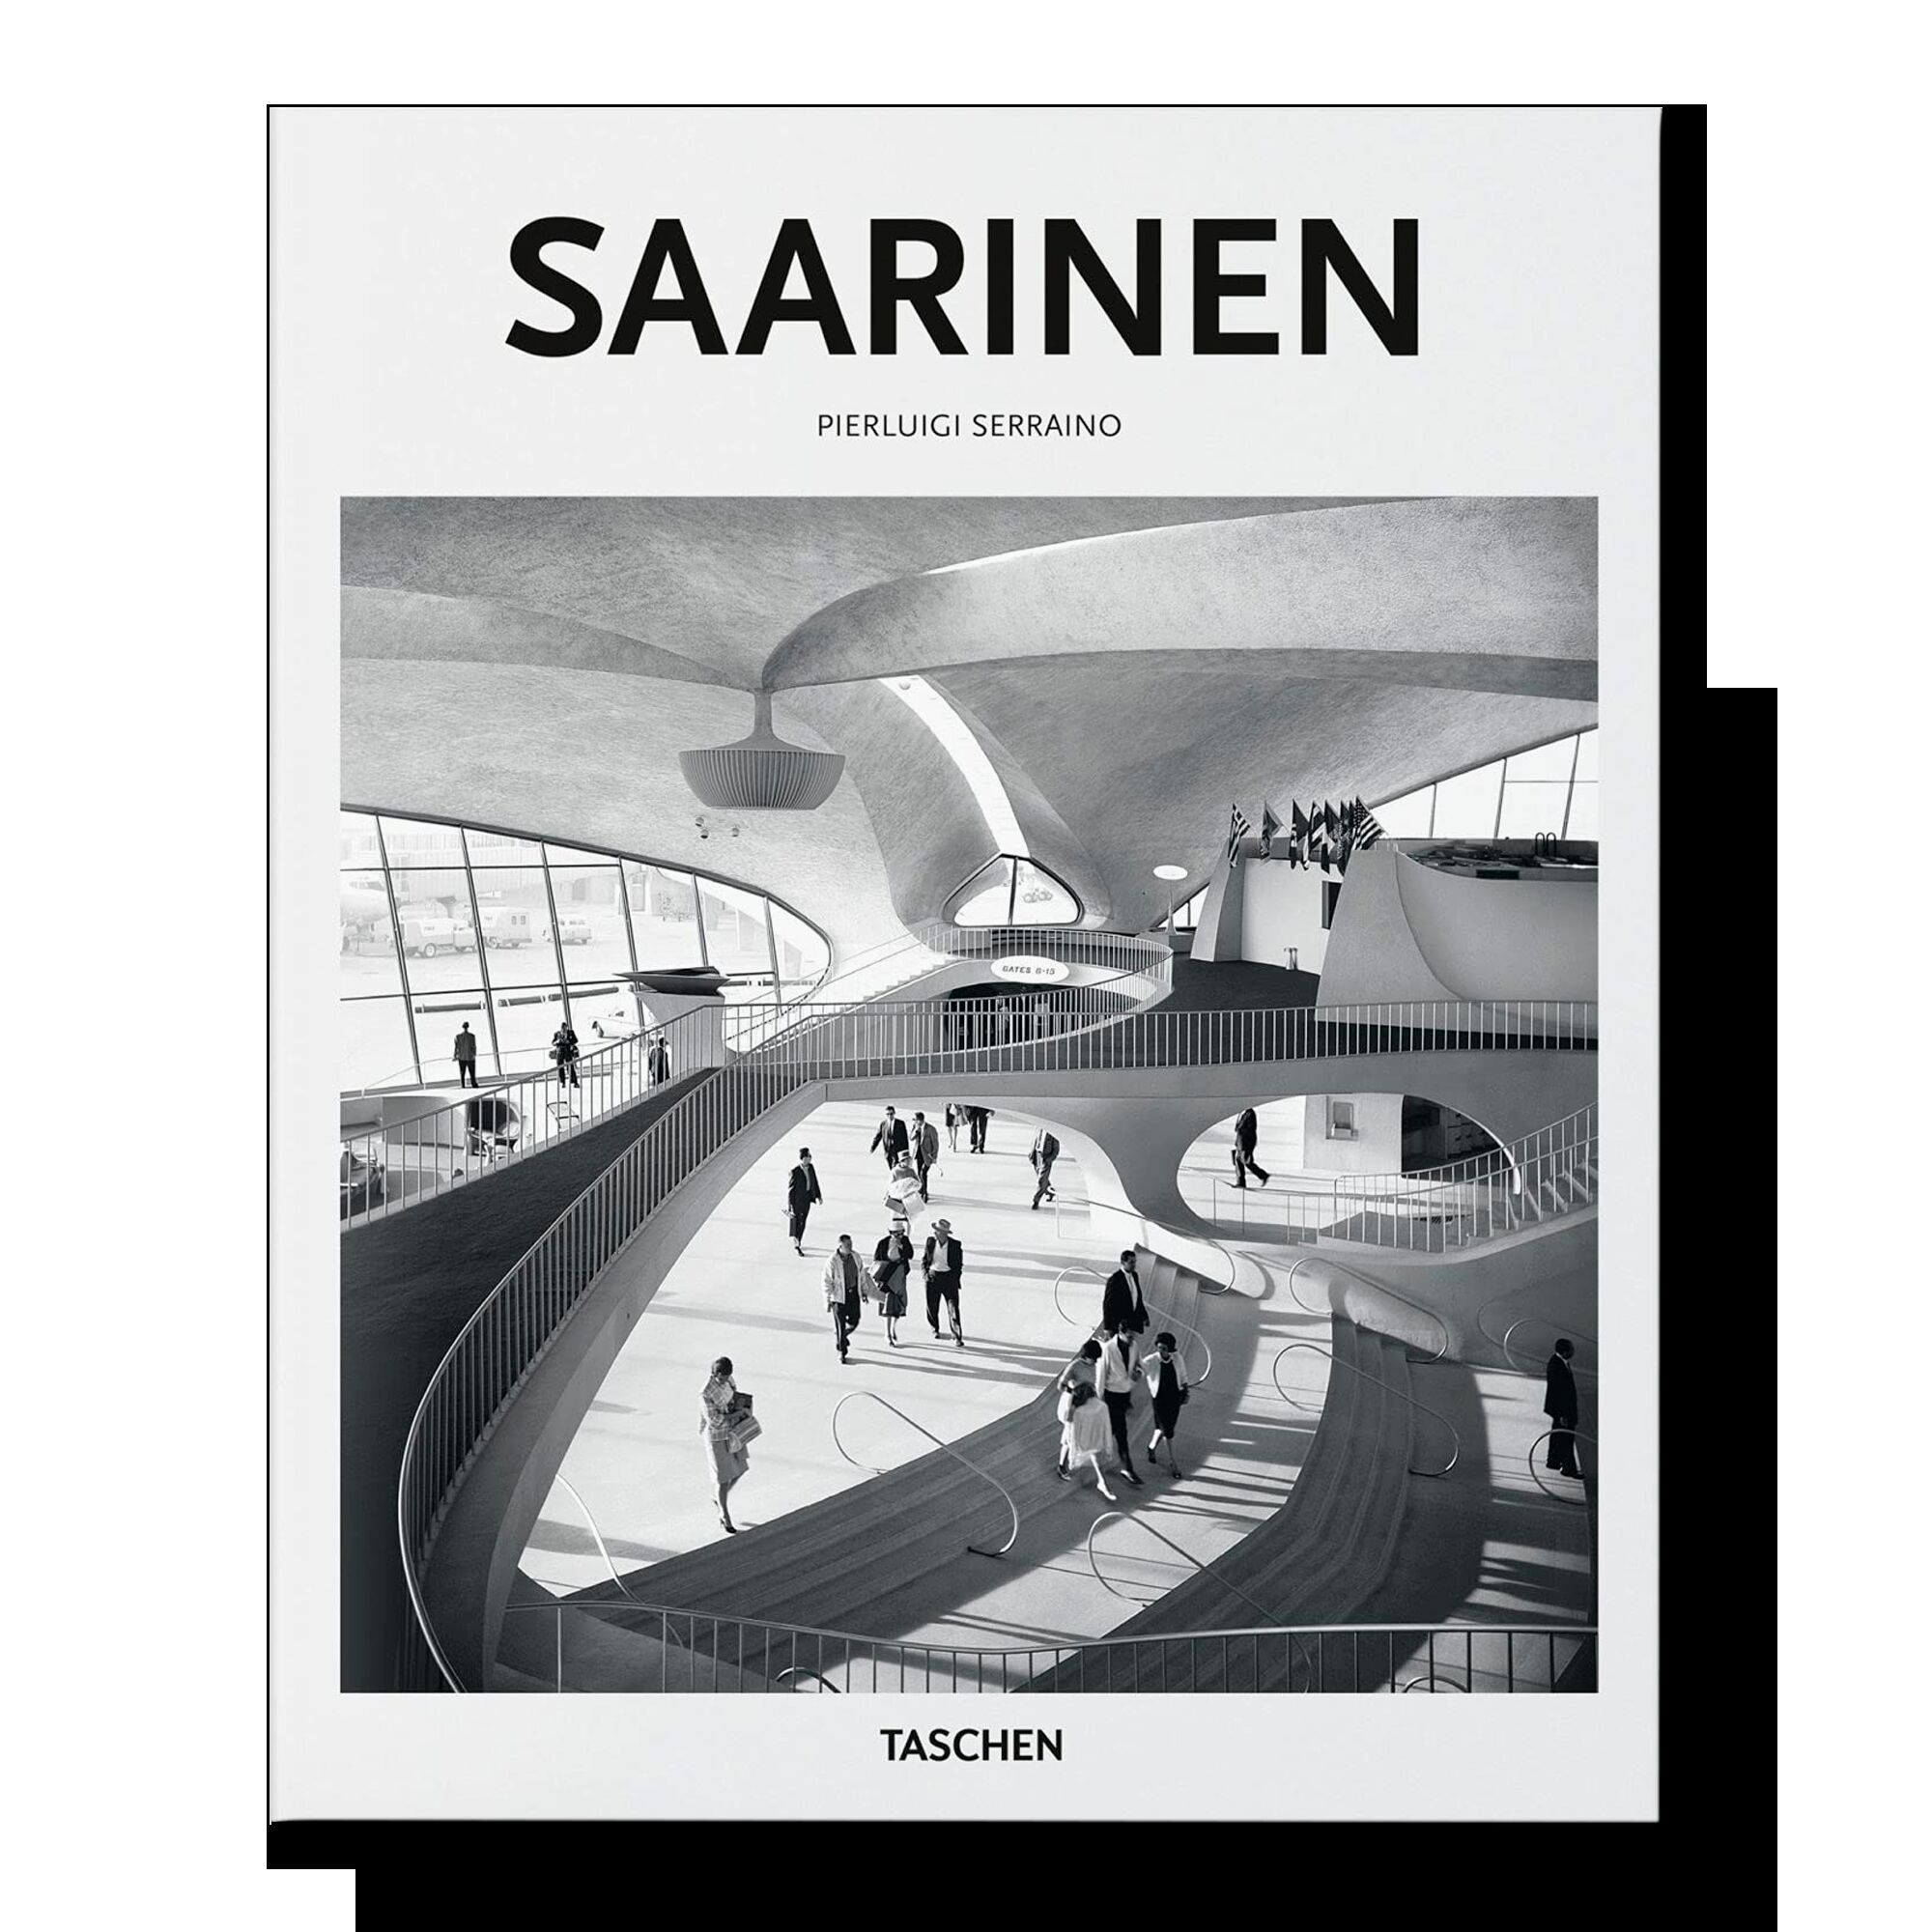 Eero Saarinen: 1910-1961: a Structural Expressionist